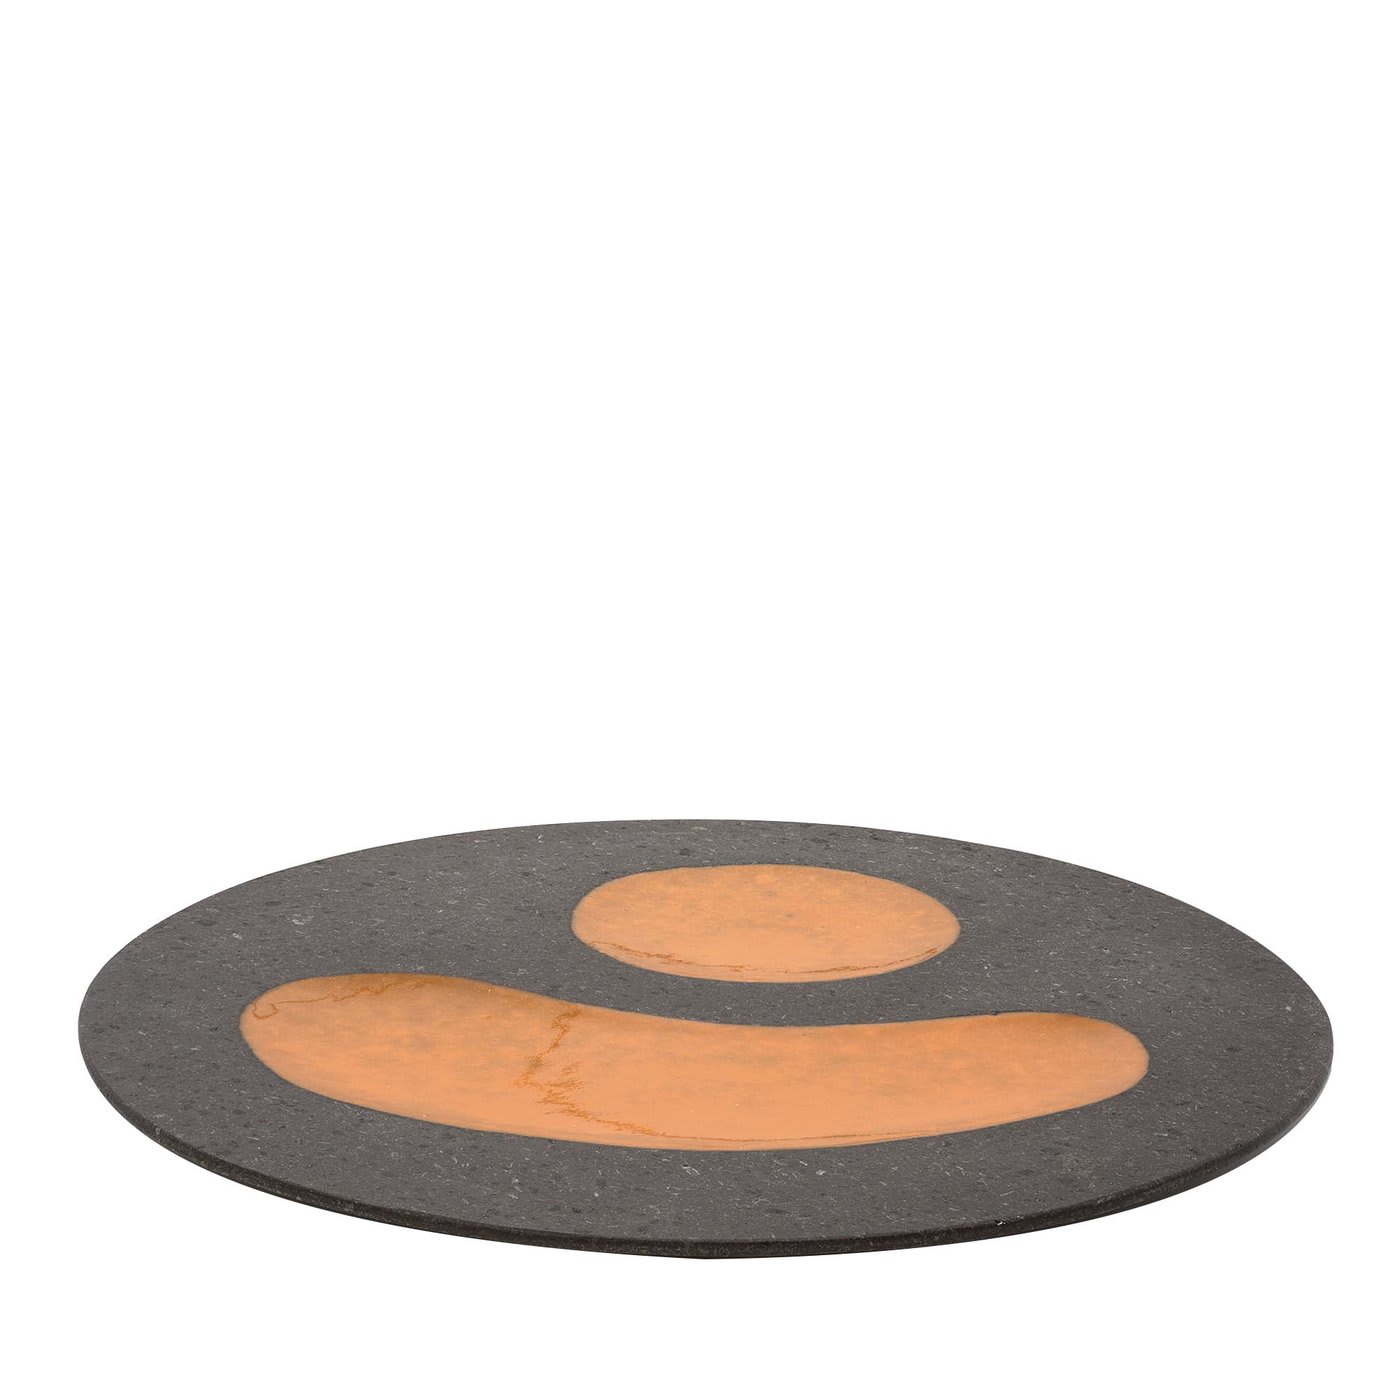 Laghi Large Round Orange Serving Plate by Roberto Monte - Alfaterna Marmi